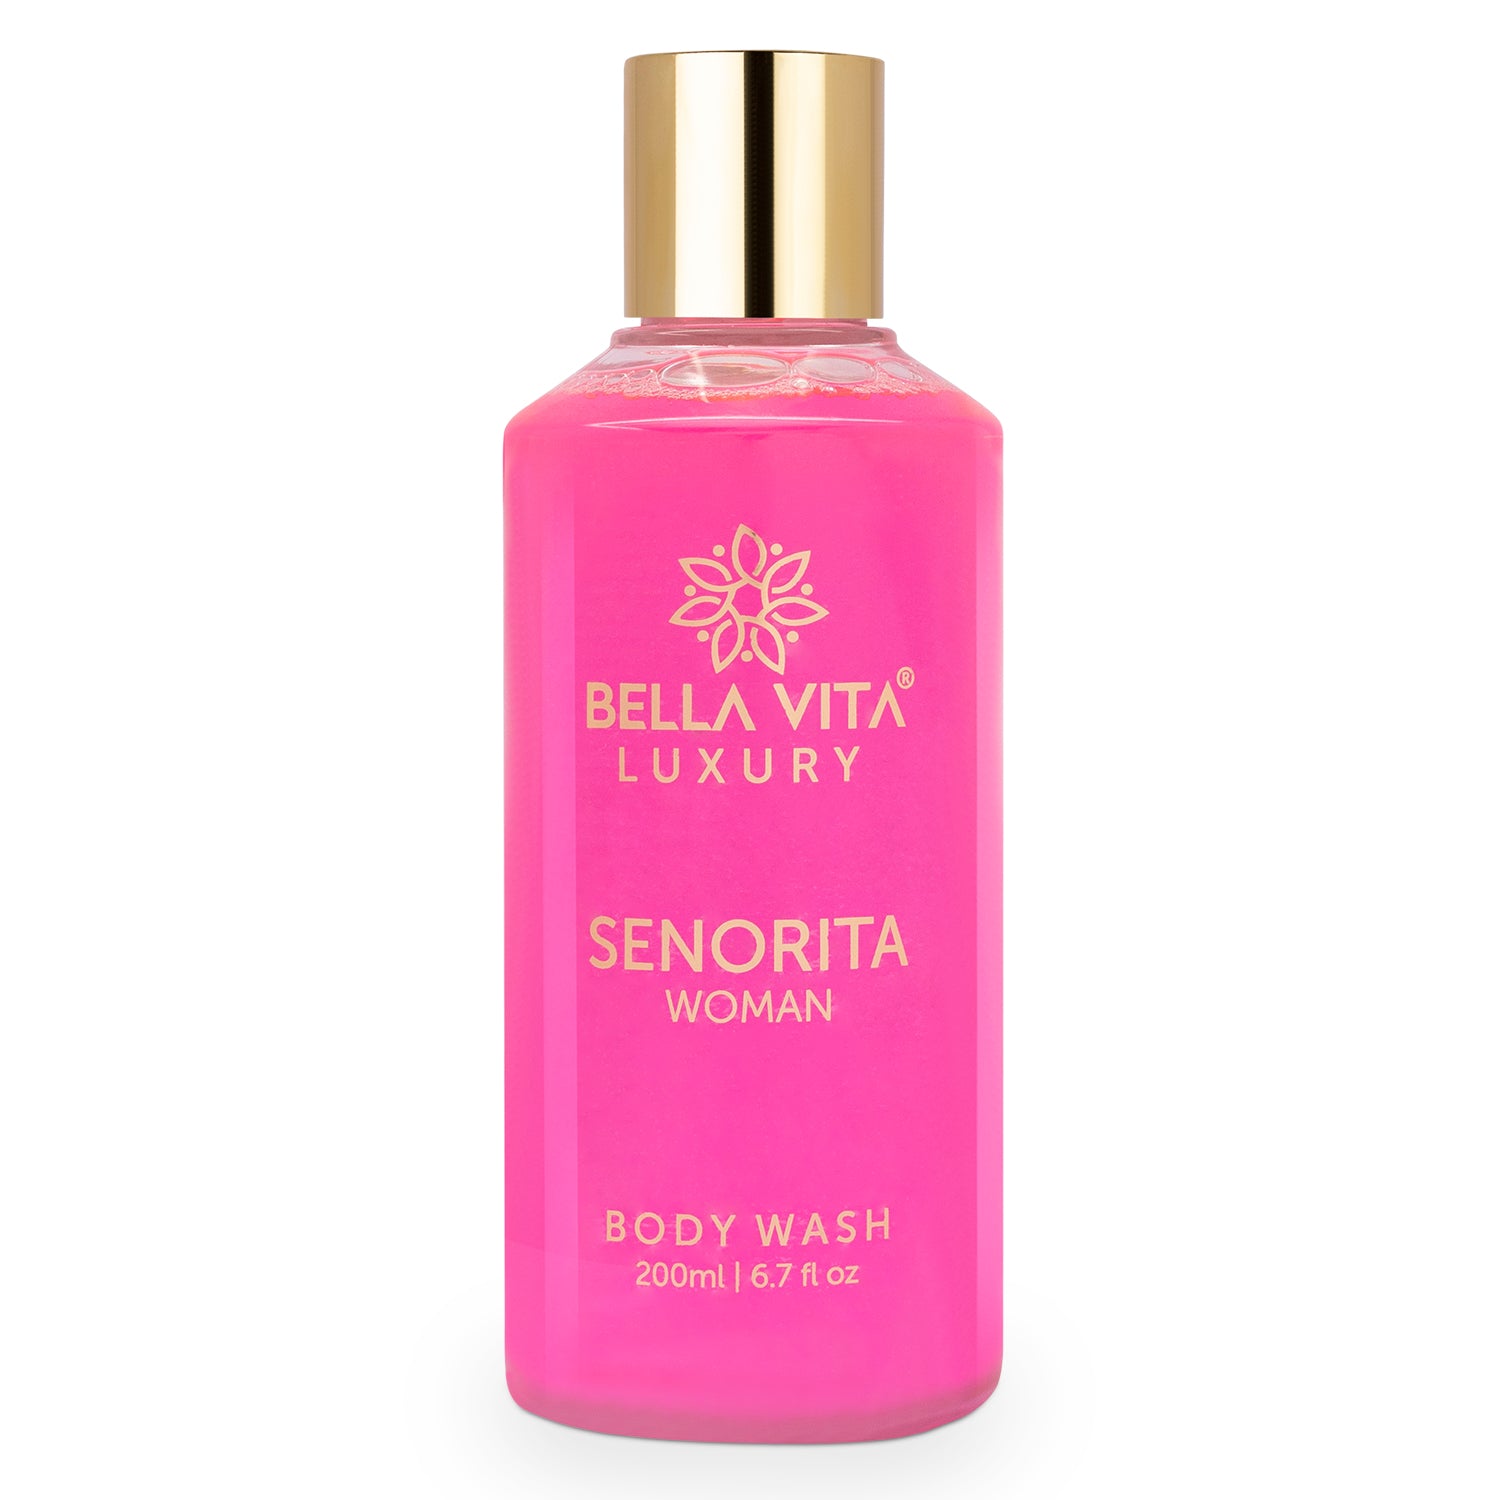 SENORITA WOMAN Body Wash - Bella Vita Luxury